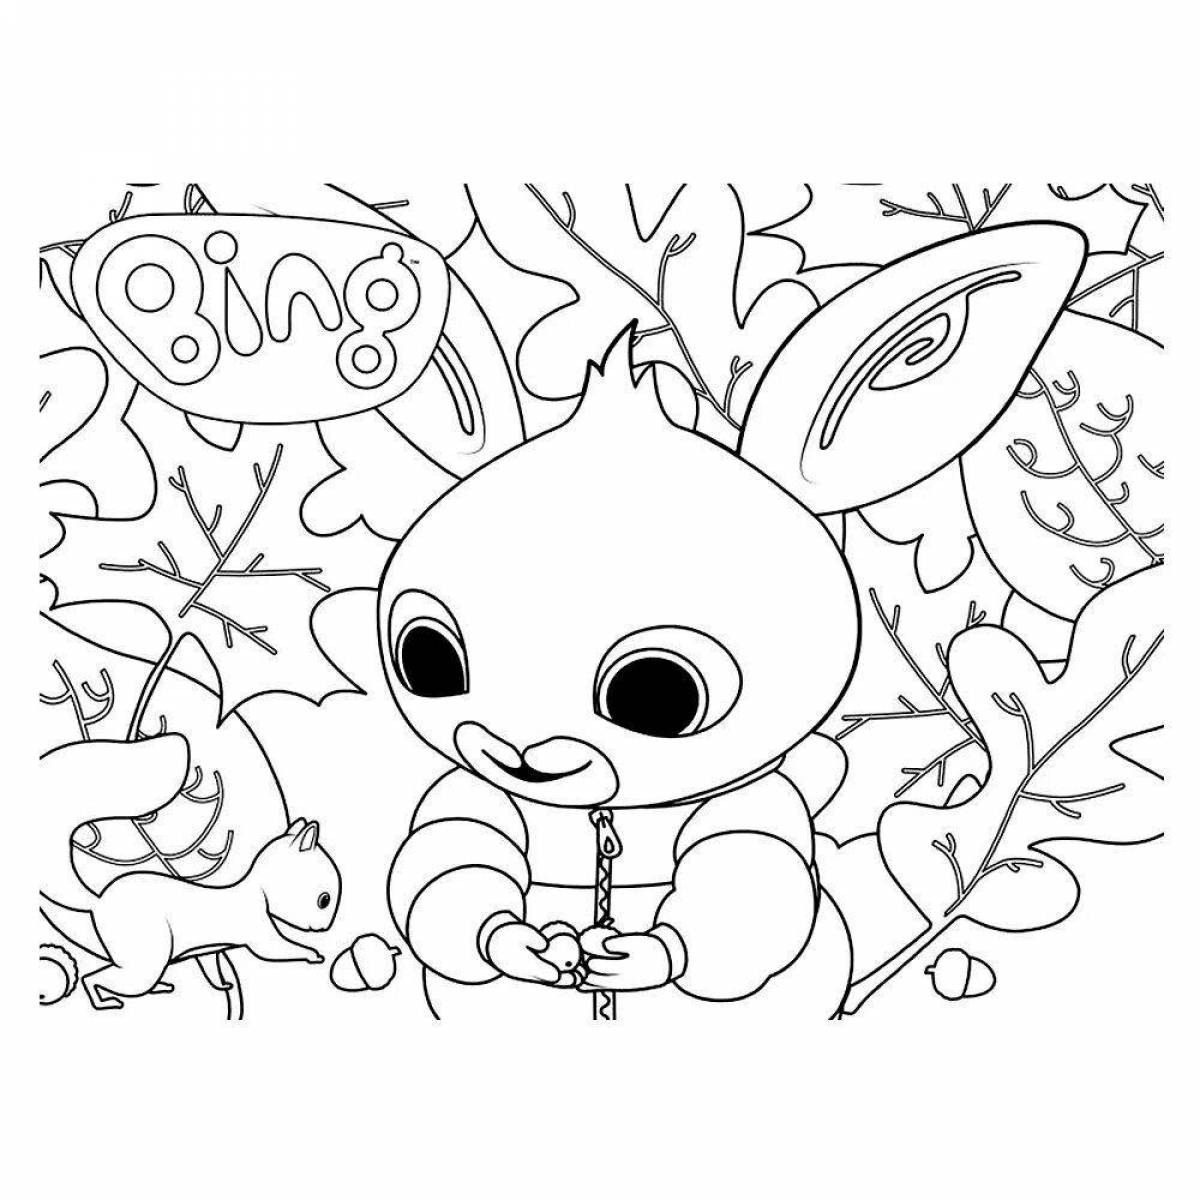 Bing bunny funny coloring book